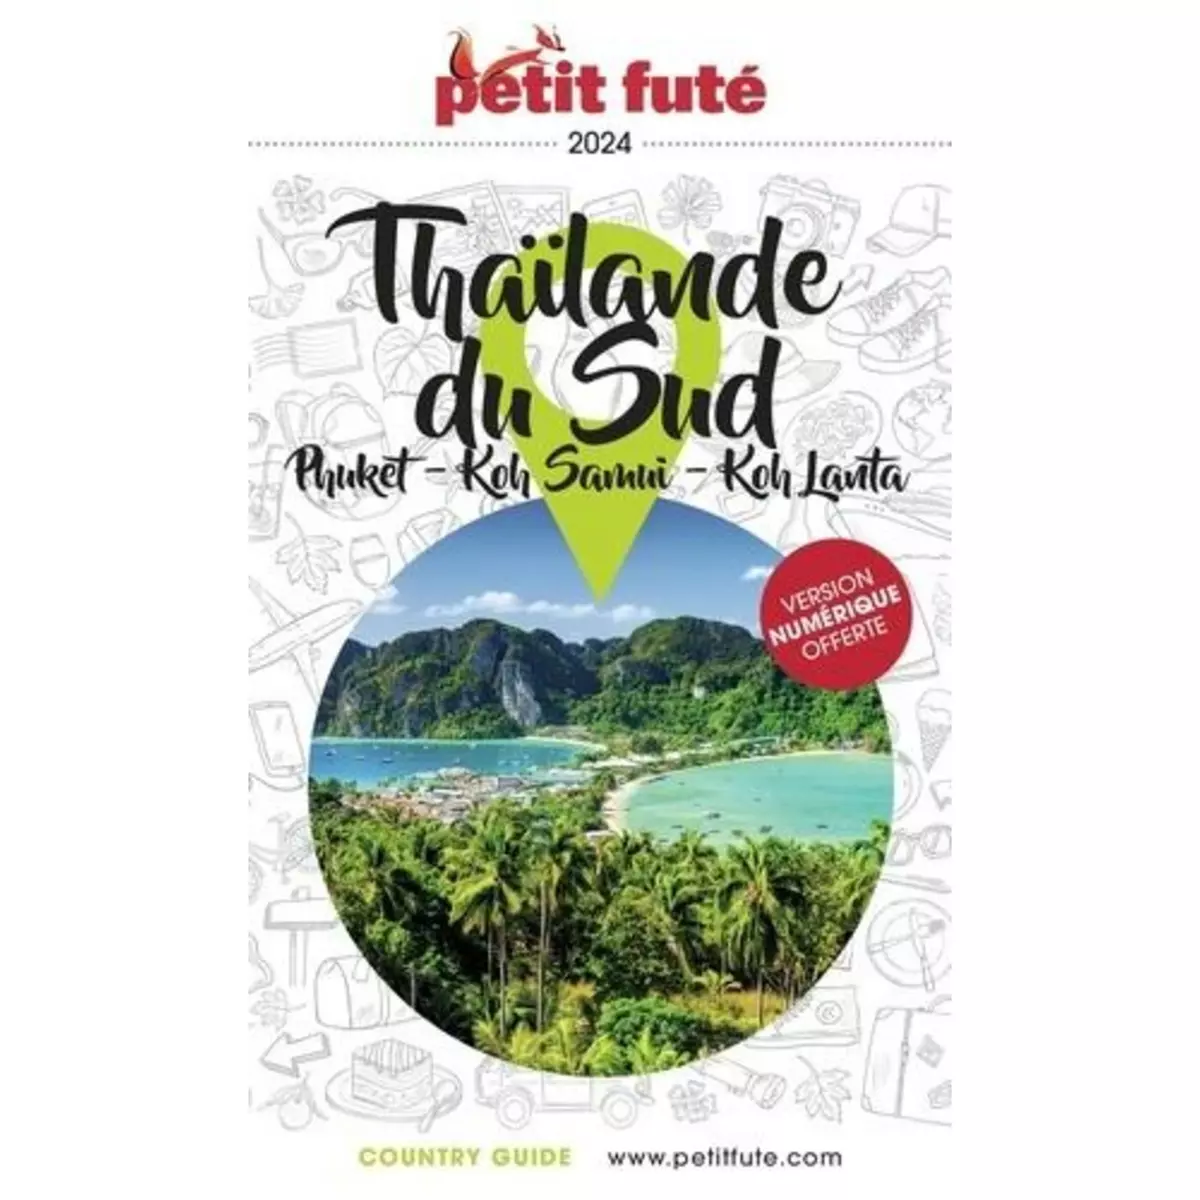  PETIT FUTE THAILANDE DU SUD. PHUKET, KOH SAMUI, KOH LANTA, EDITION 2024-2025, Petit Futé